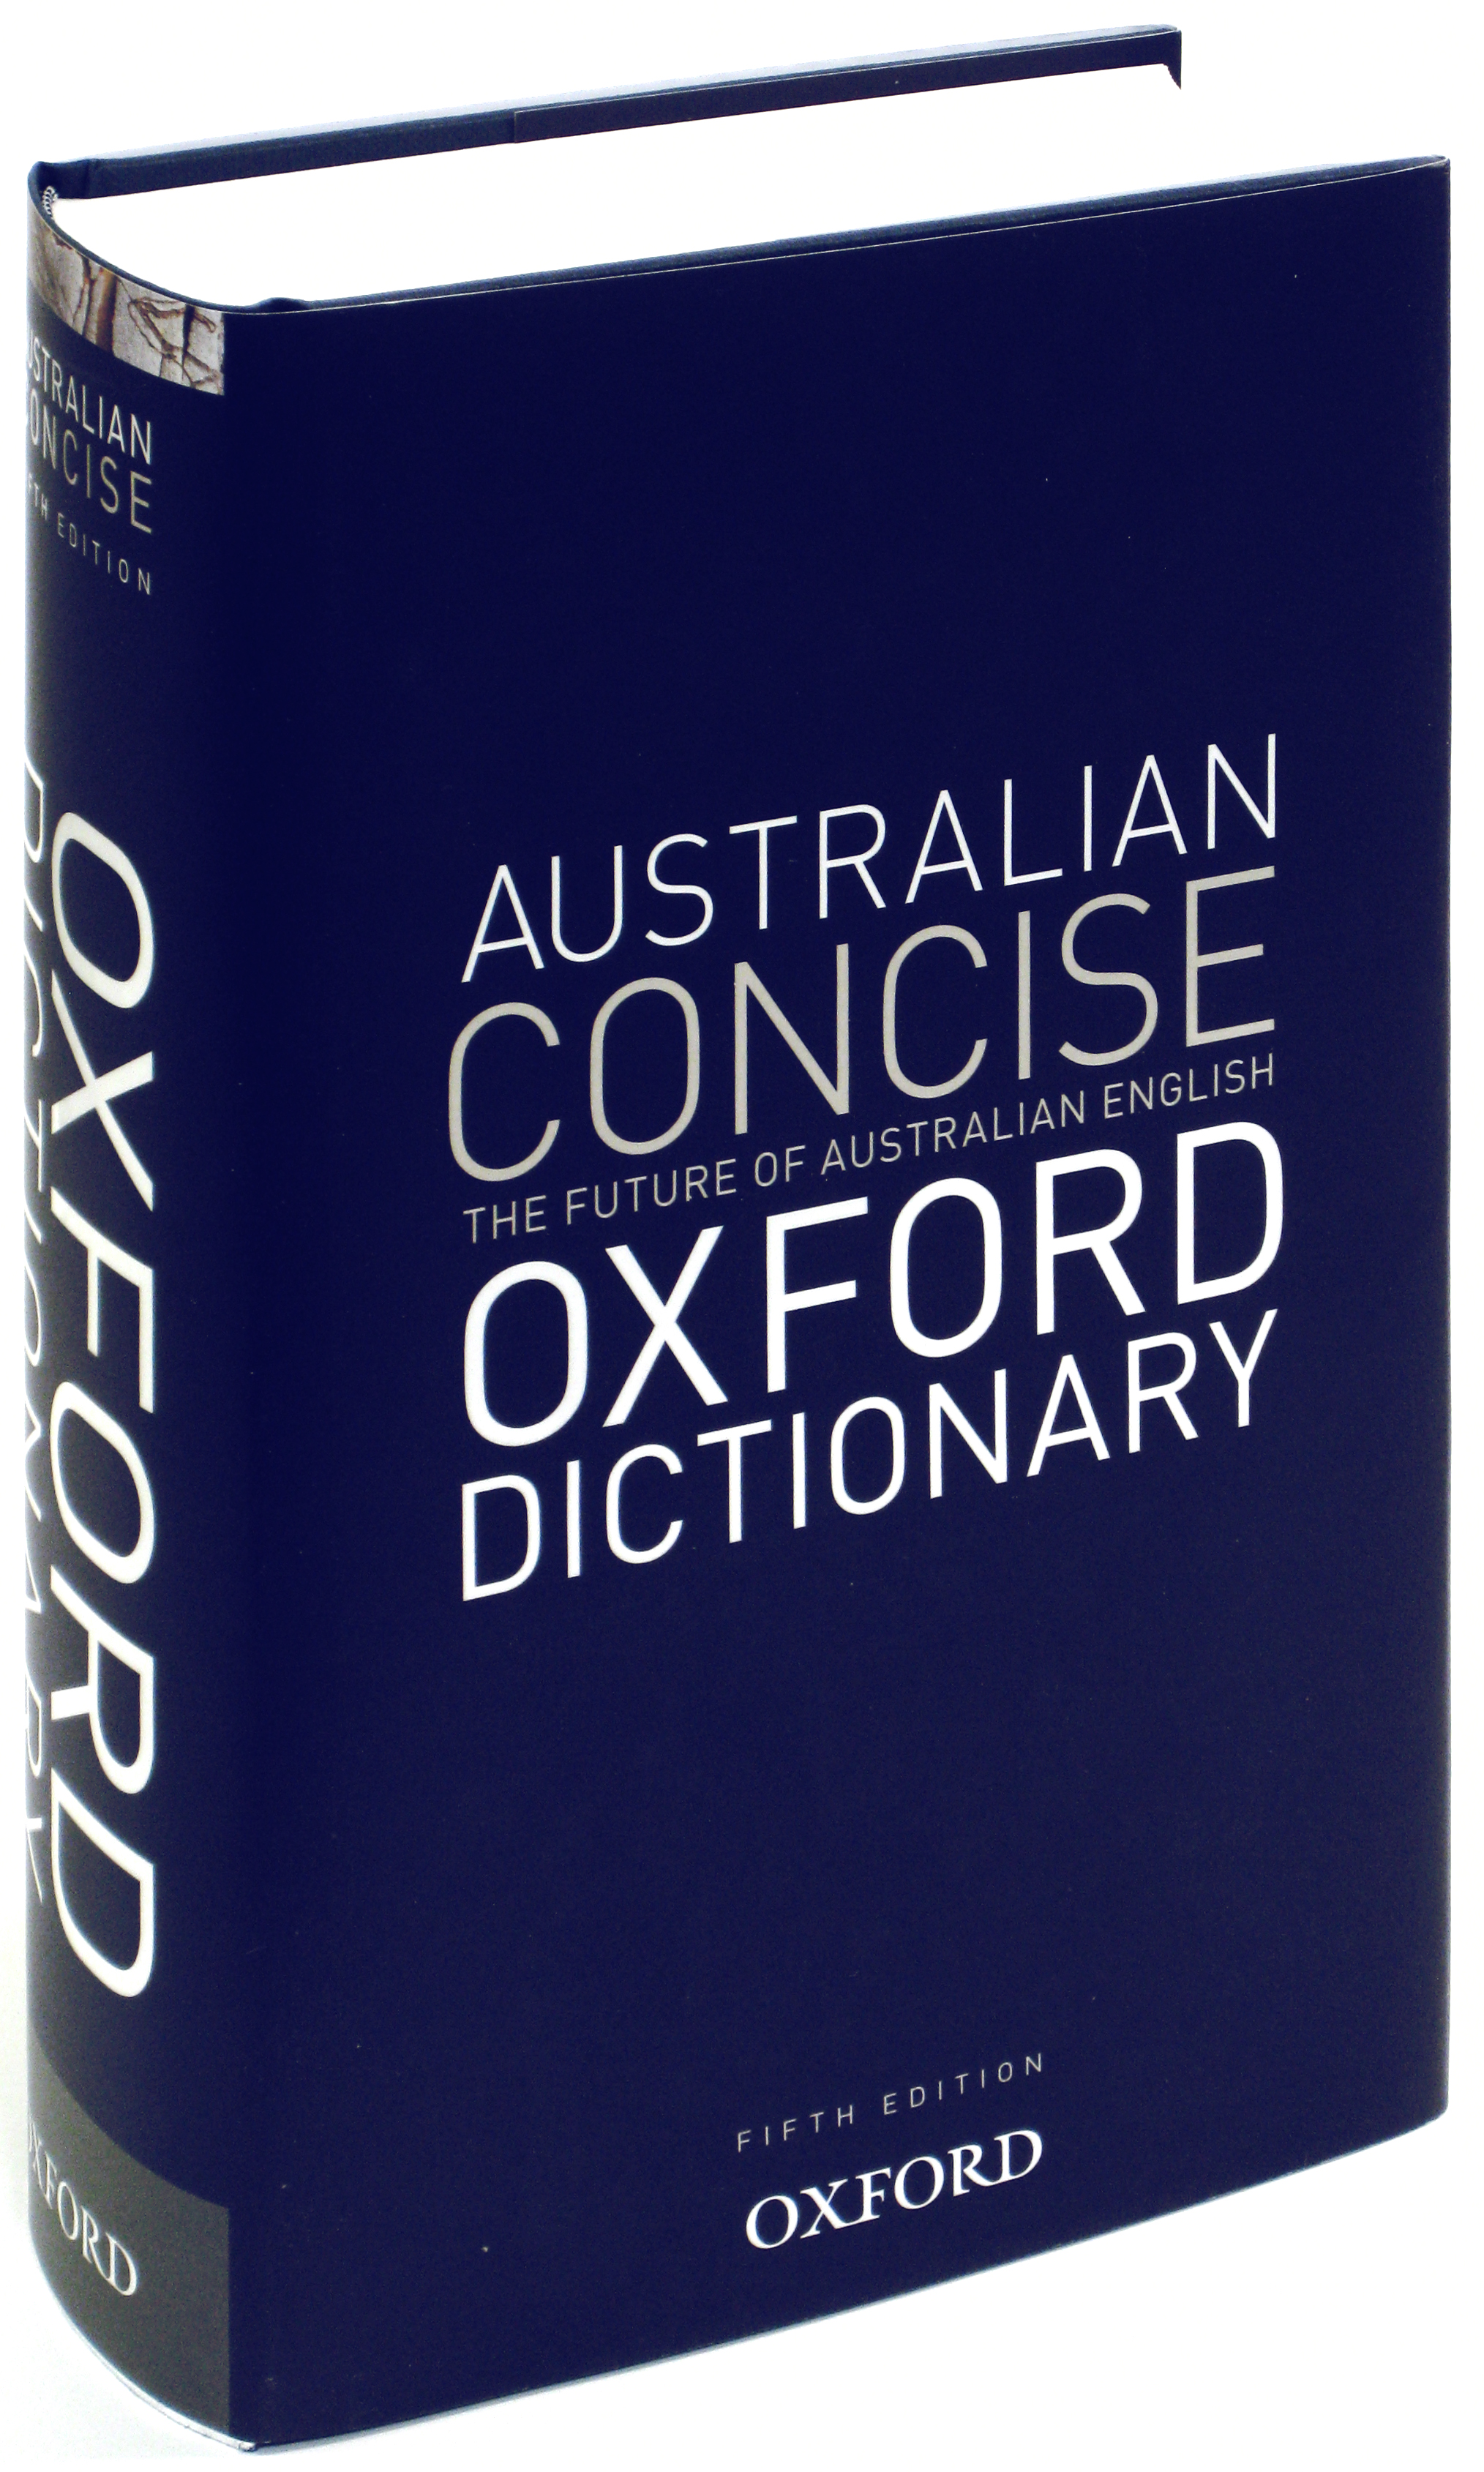 Australian Concise Oxford Dictionary e5